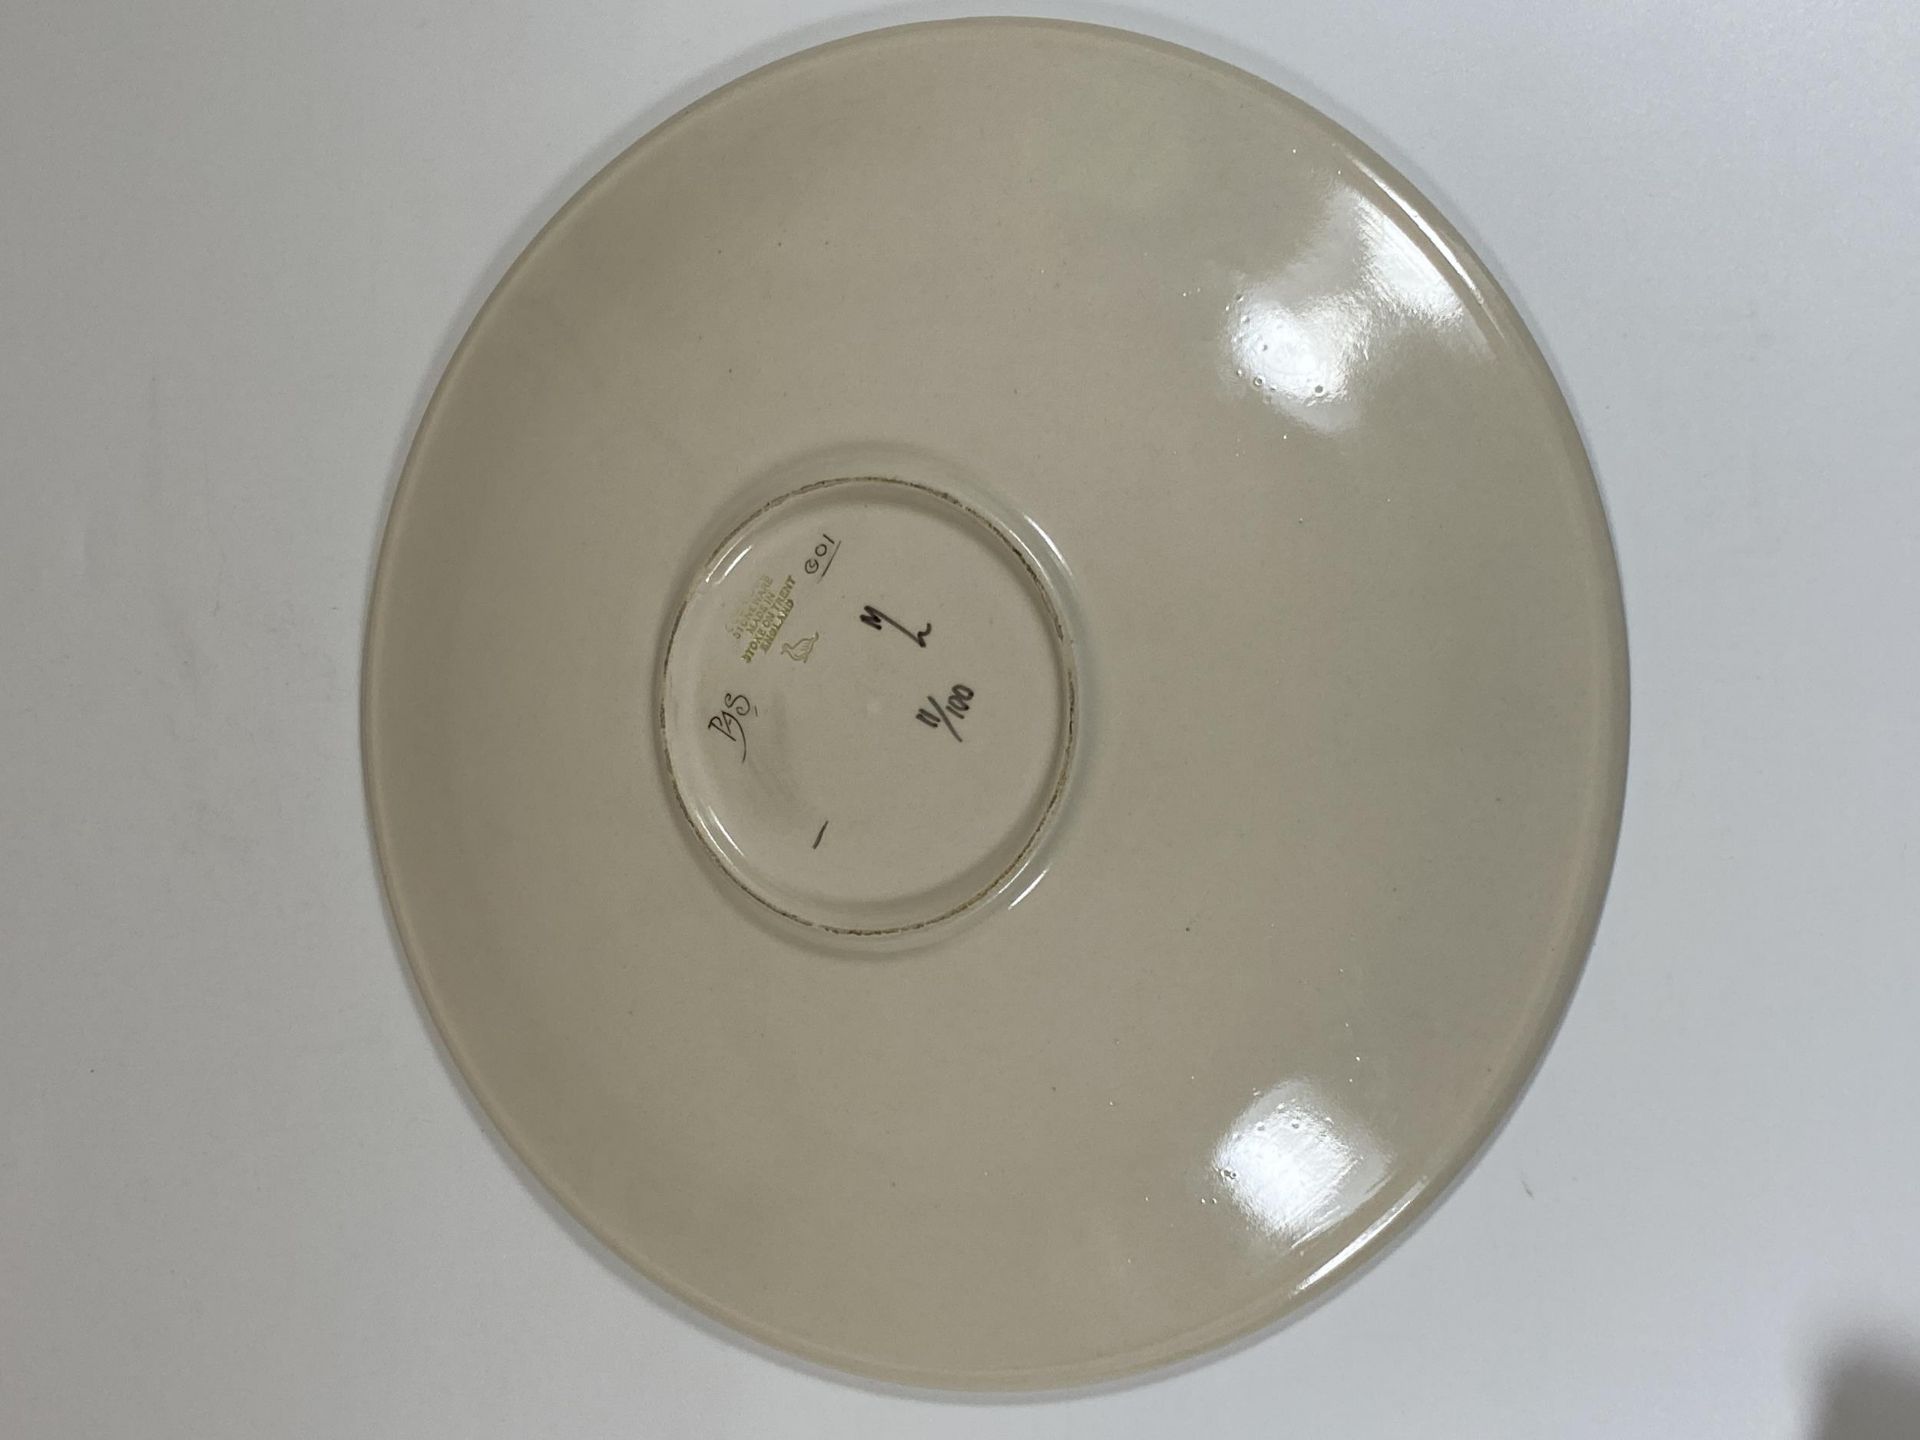 A LIMITED EDITION COBRIDGE STONEWARE FRUIT PLATE, NUMBER 11/100, DIAMETER 28CM - Image 3 of 3